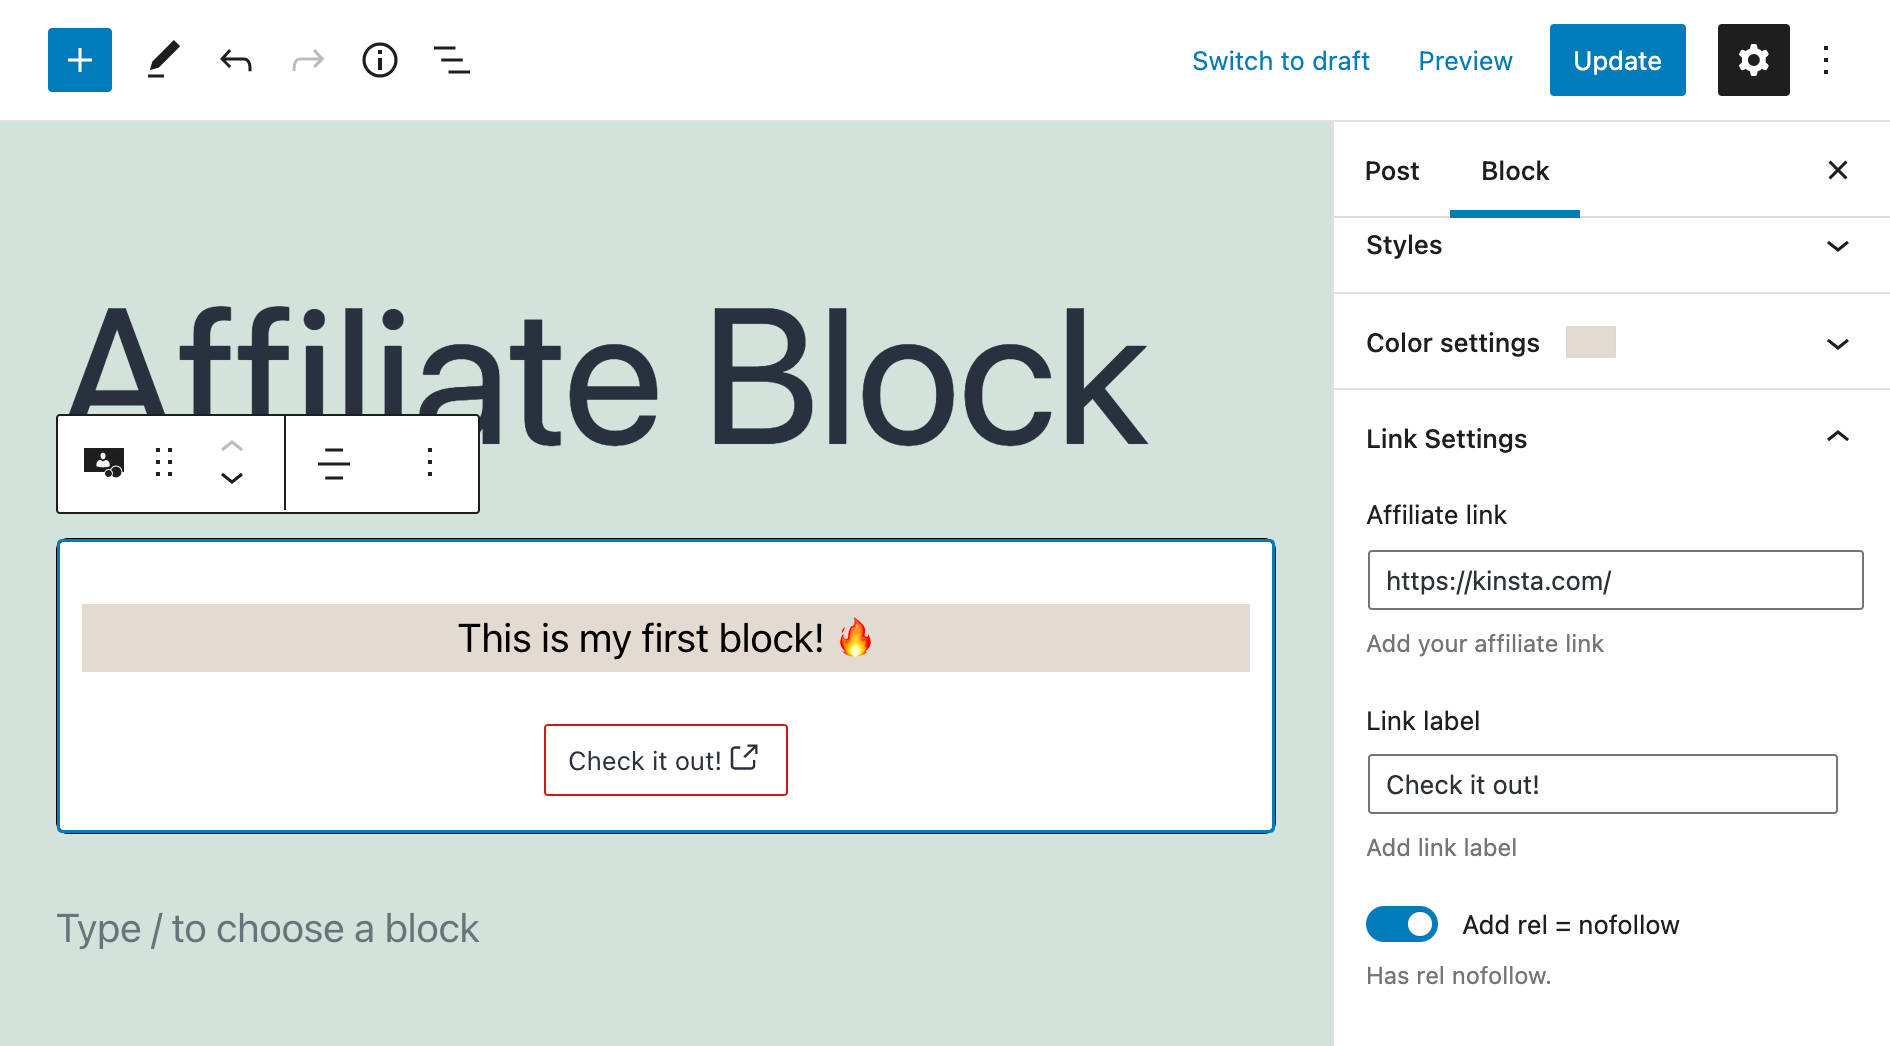 Affiliate block link settings." width="1890" height="1046"  />

<p class=